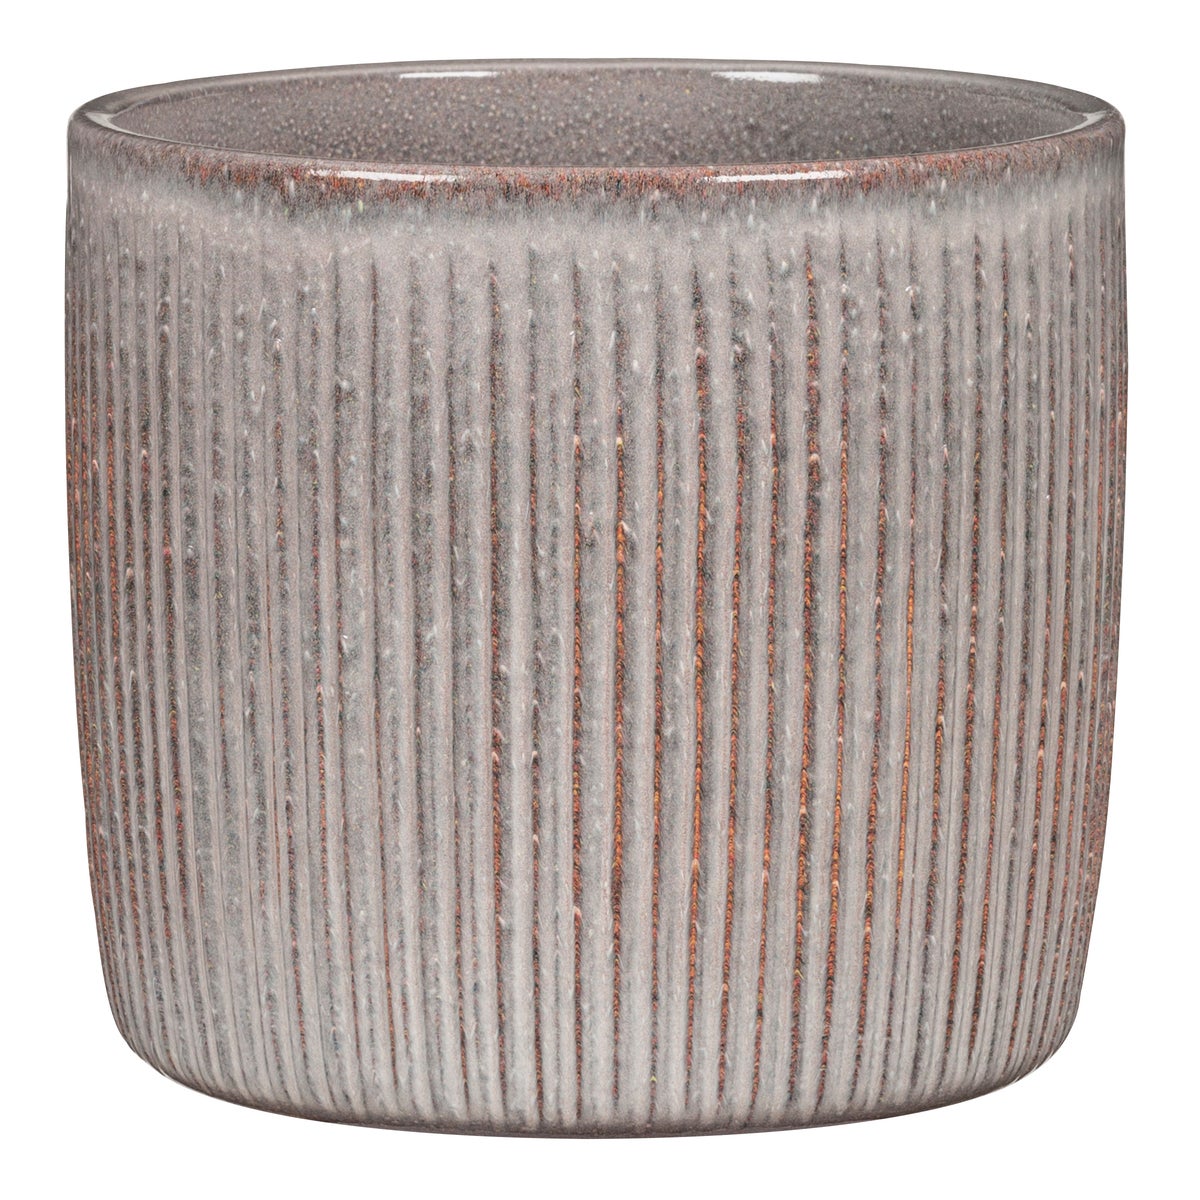 Scheurich Solido Linea, Blumentopf aus Keramik,  Farbe: Seashell, 15 cm Durchmesser, 13,7 cm hoch, 1,9 l Vol.